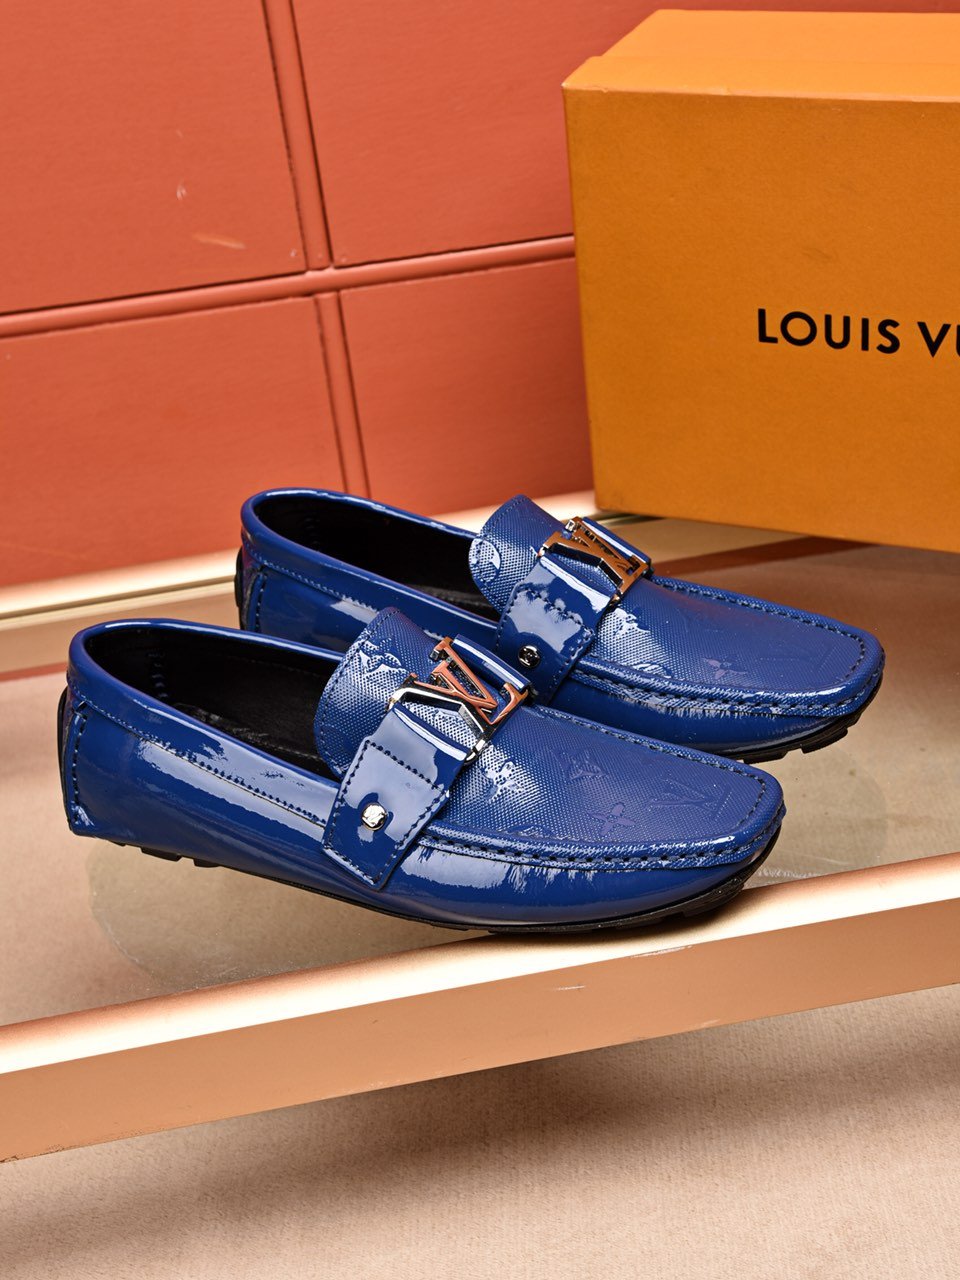 LV Louis Vuitton Men's Leather Fashion Sneakers Shoes